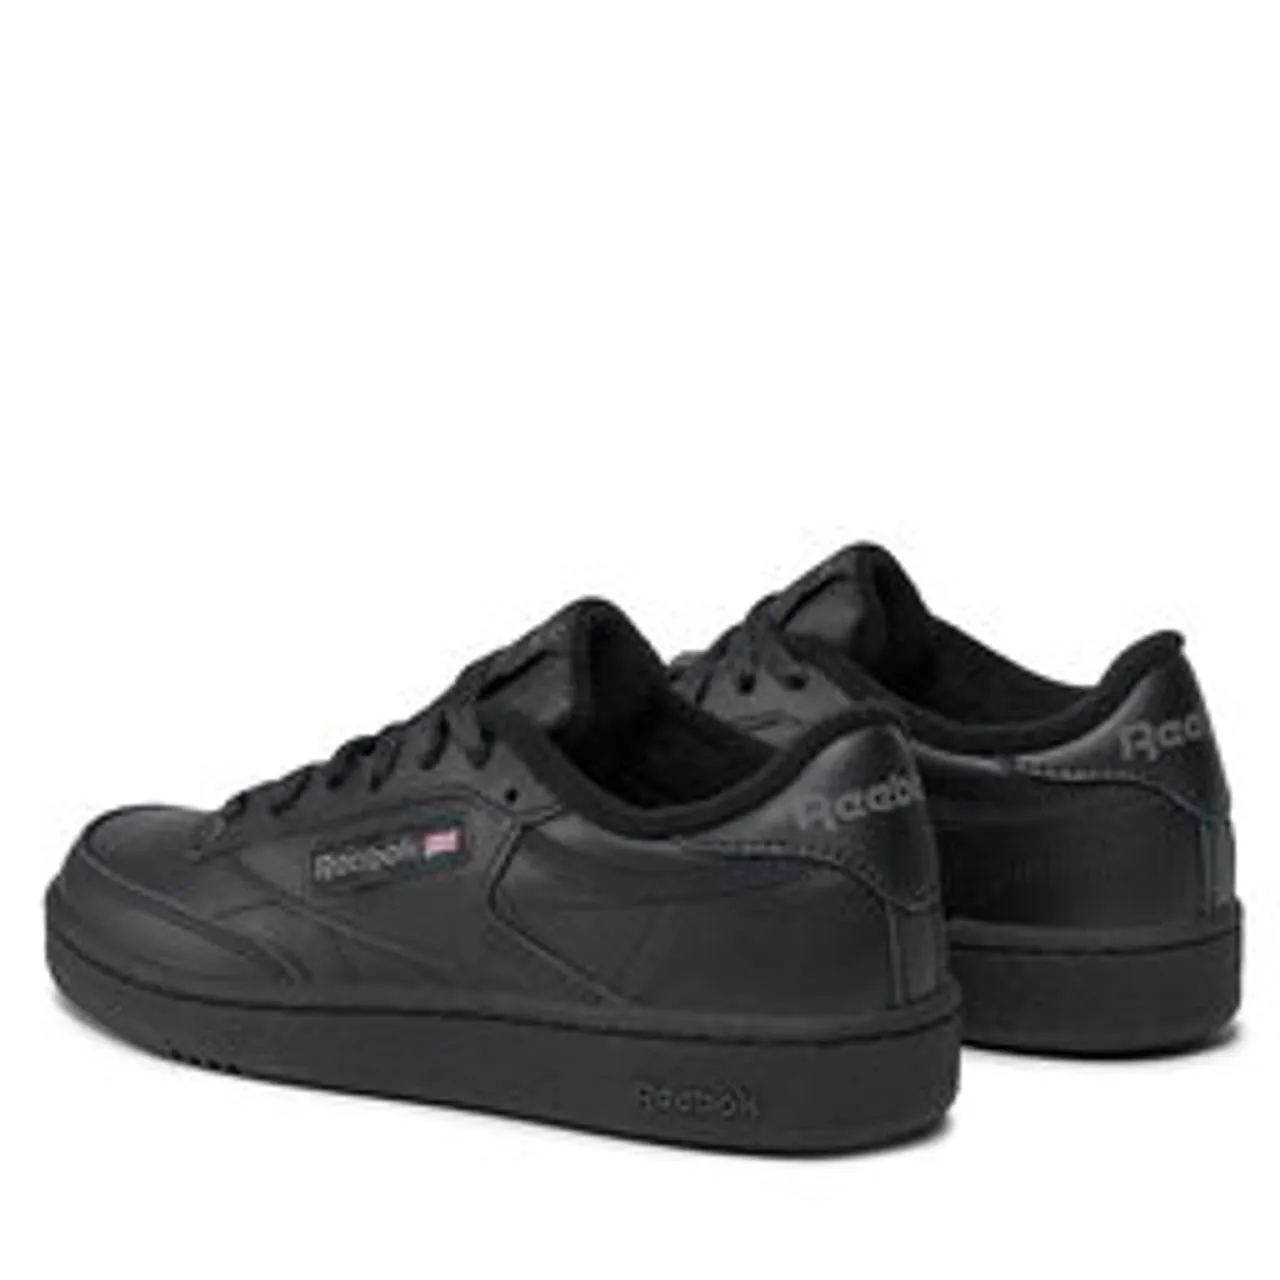 Schuhe Reebok Club C 85 AR0454 Black/Charcoal